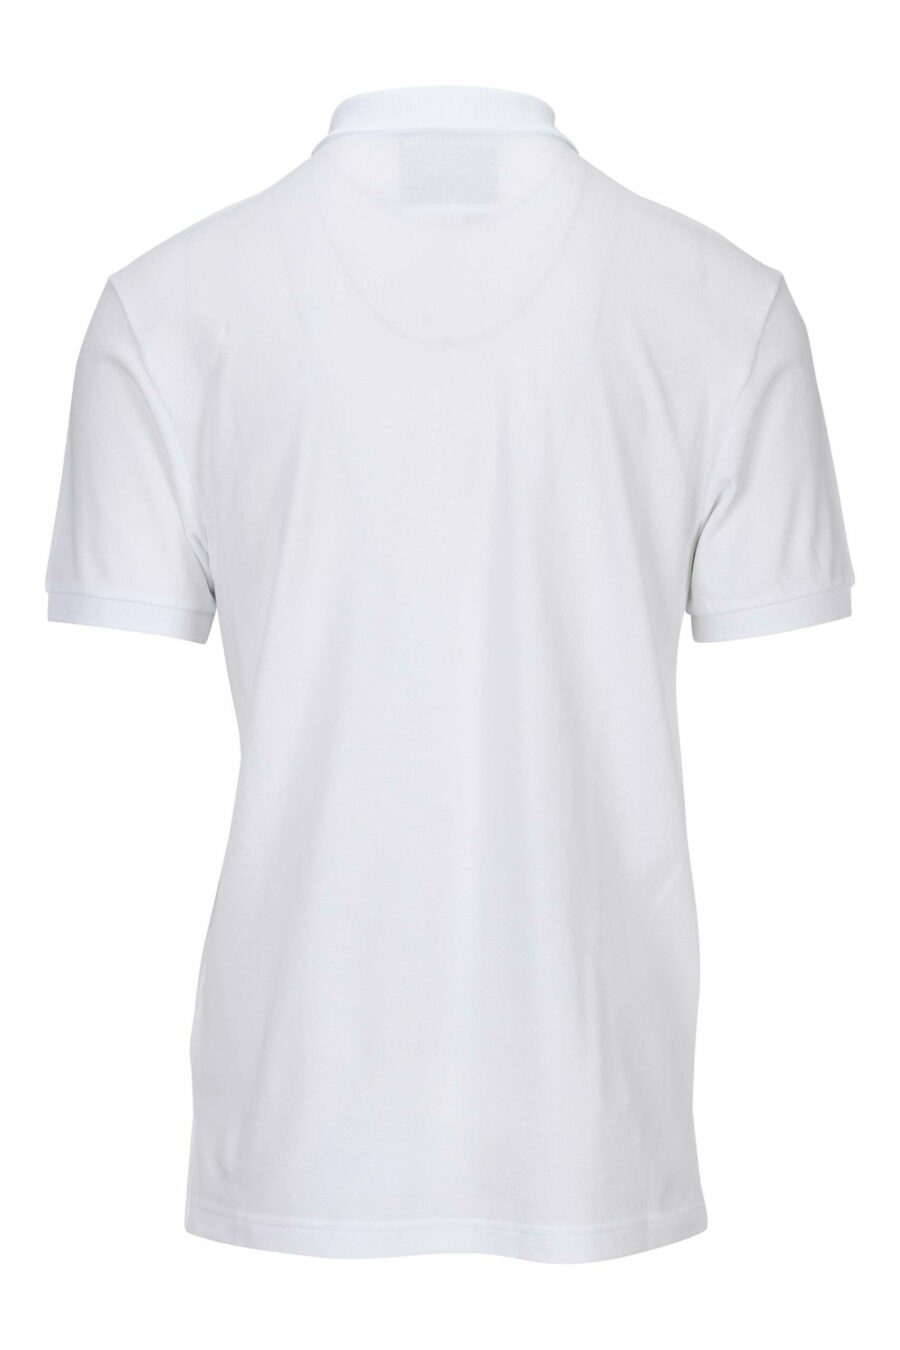 White polo shirt with black mini-logo label - 667113402154 1 scaled